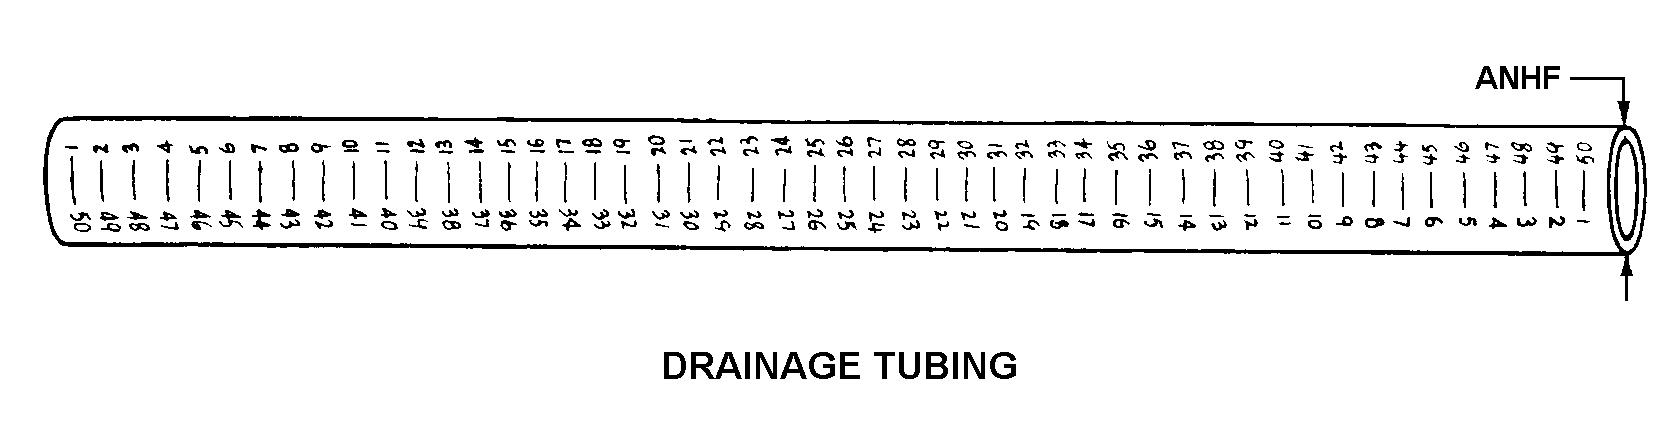 DRAINAGE TUBING style nsn 6515-01-384-9023